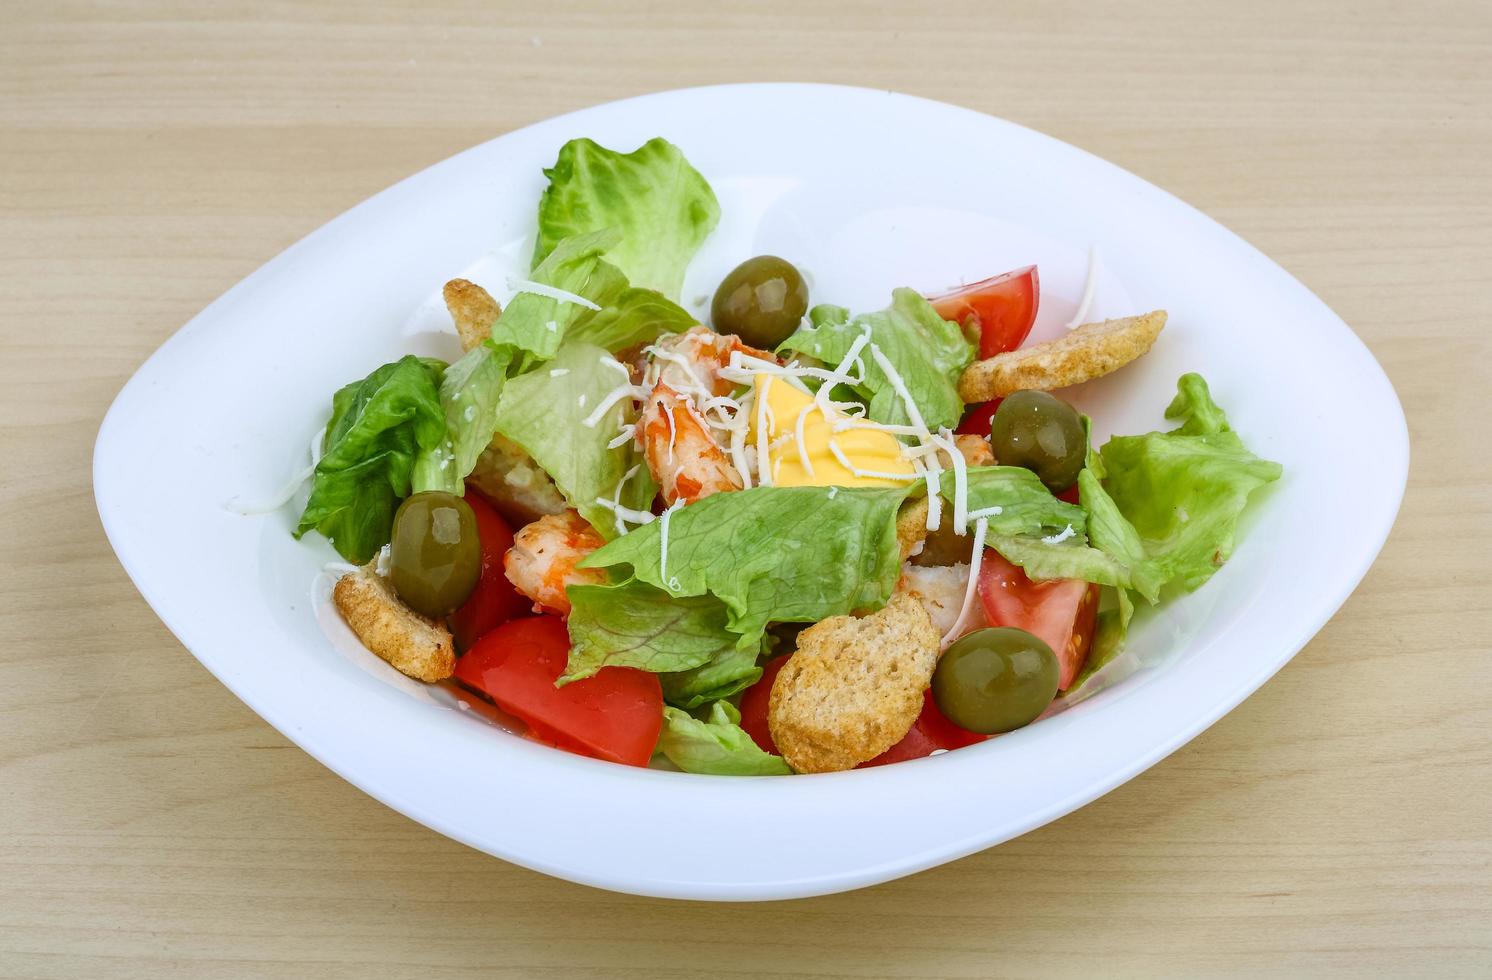 Caesar salad dish photo